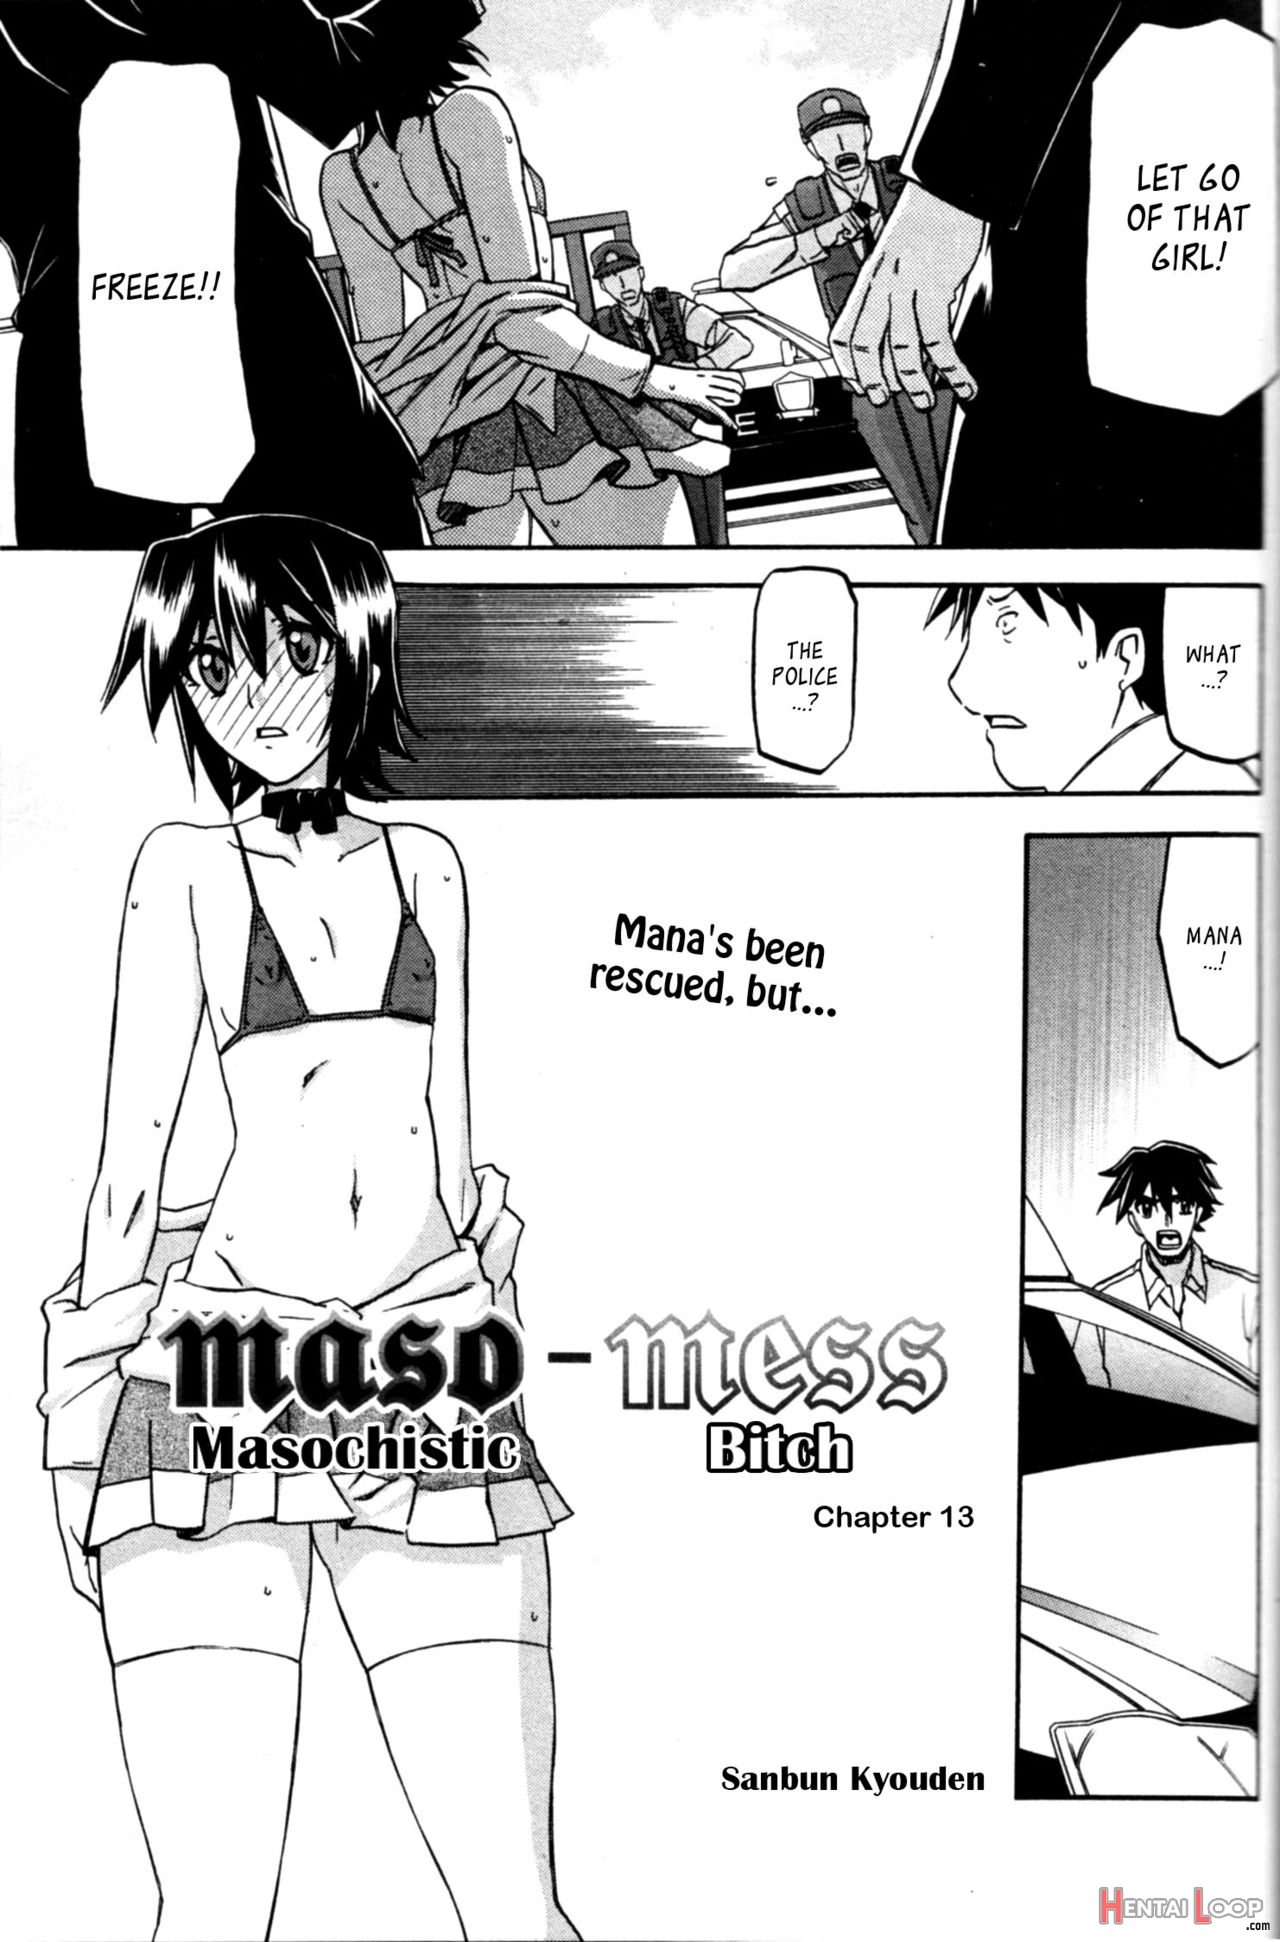 Maso-mess page 203